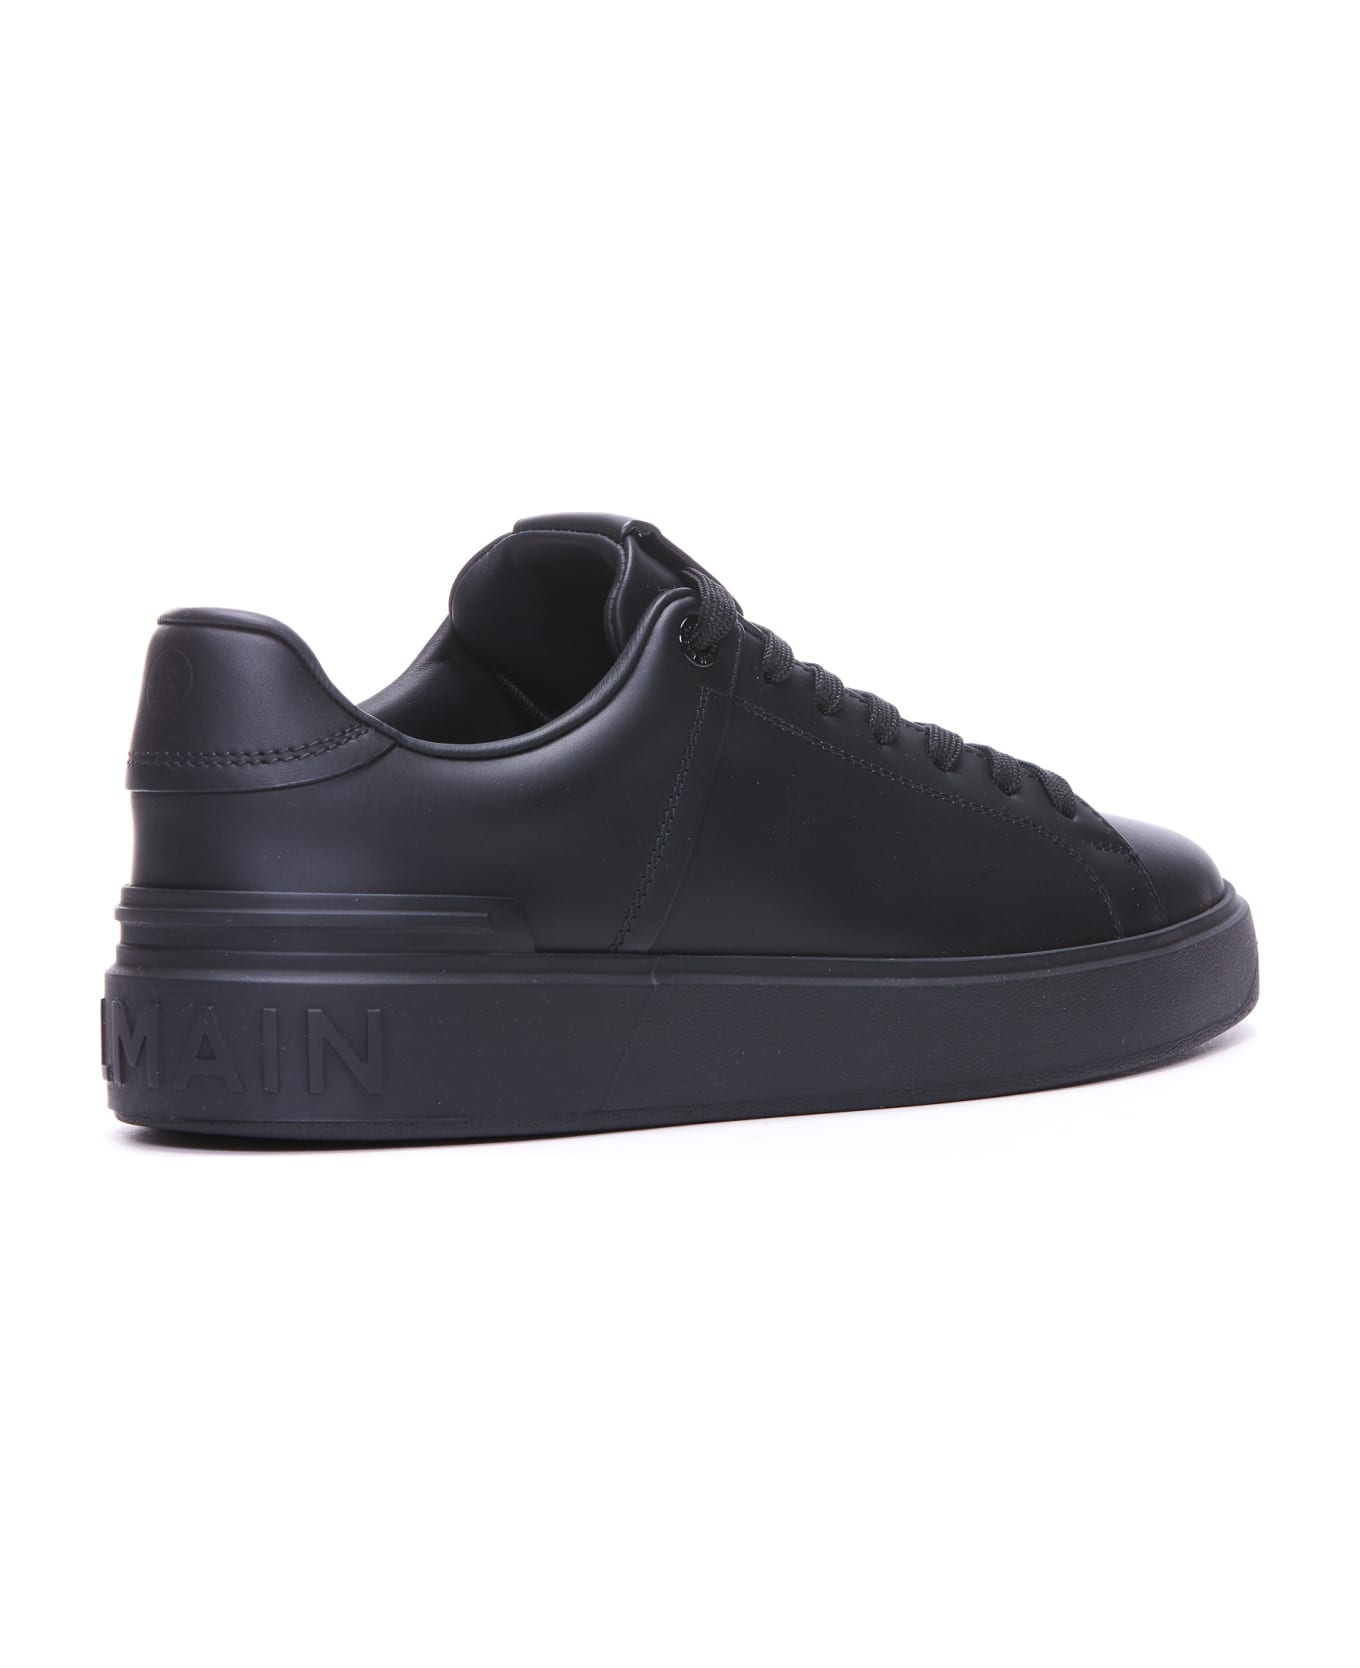 Balmain B Court Sneakers - Black